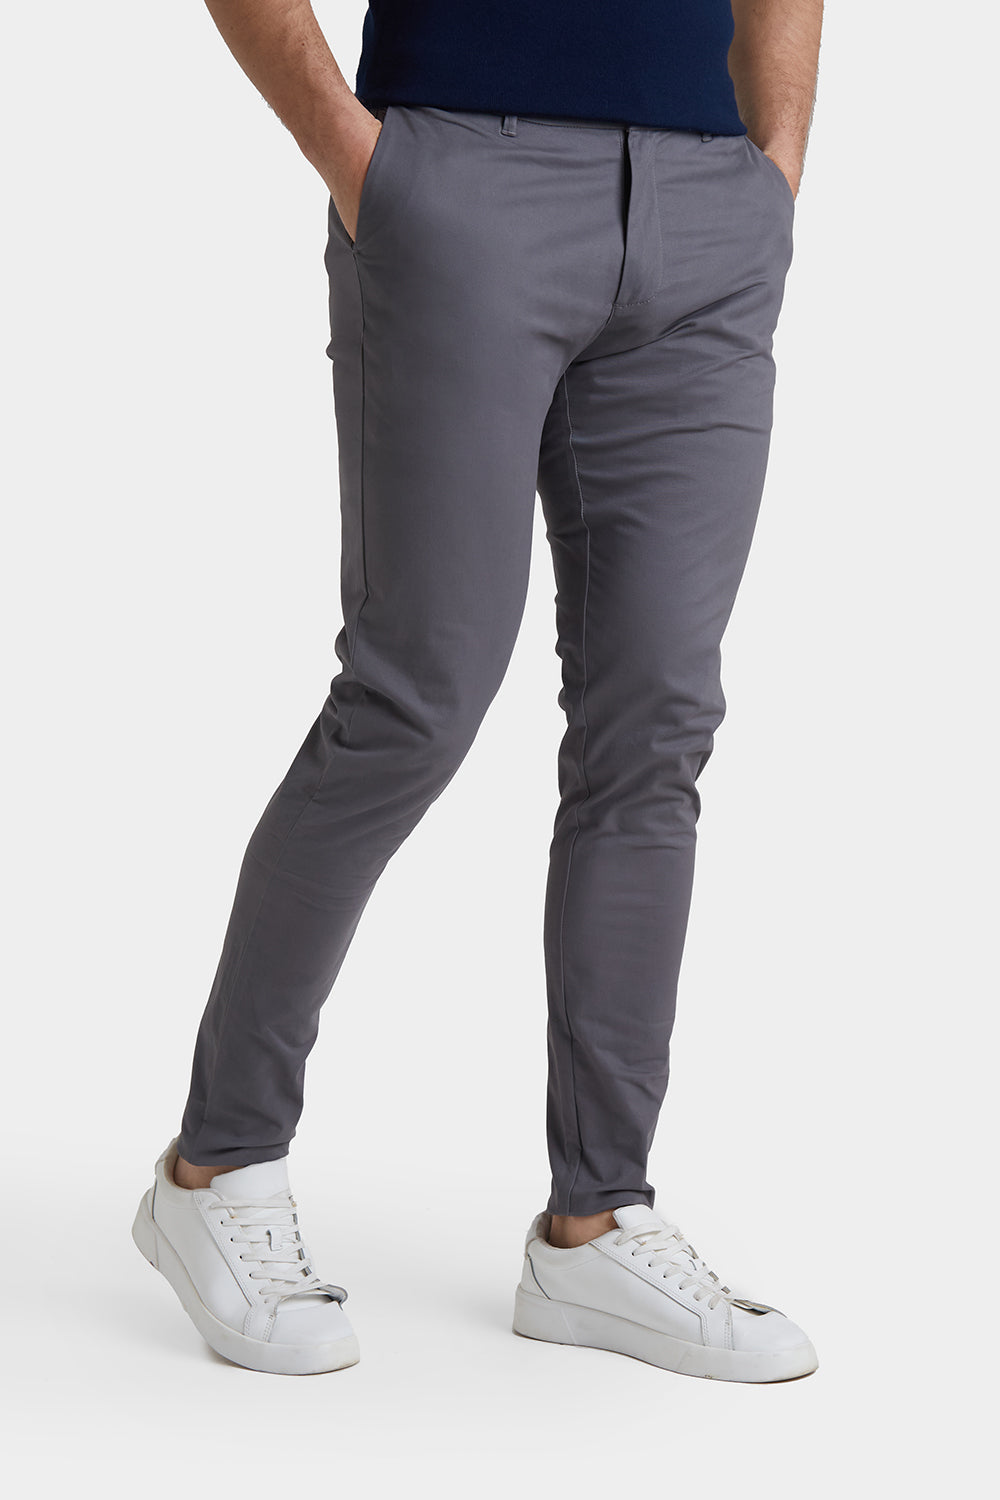 Simon Jersey Women's Trousers, Slim Leg, Regular Length, Grey